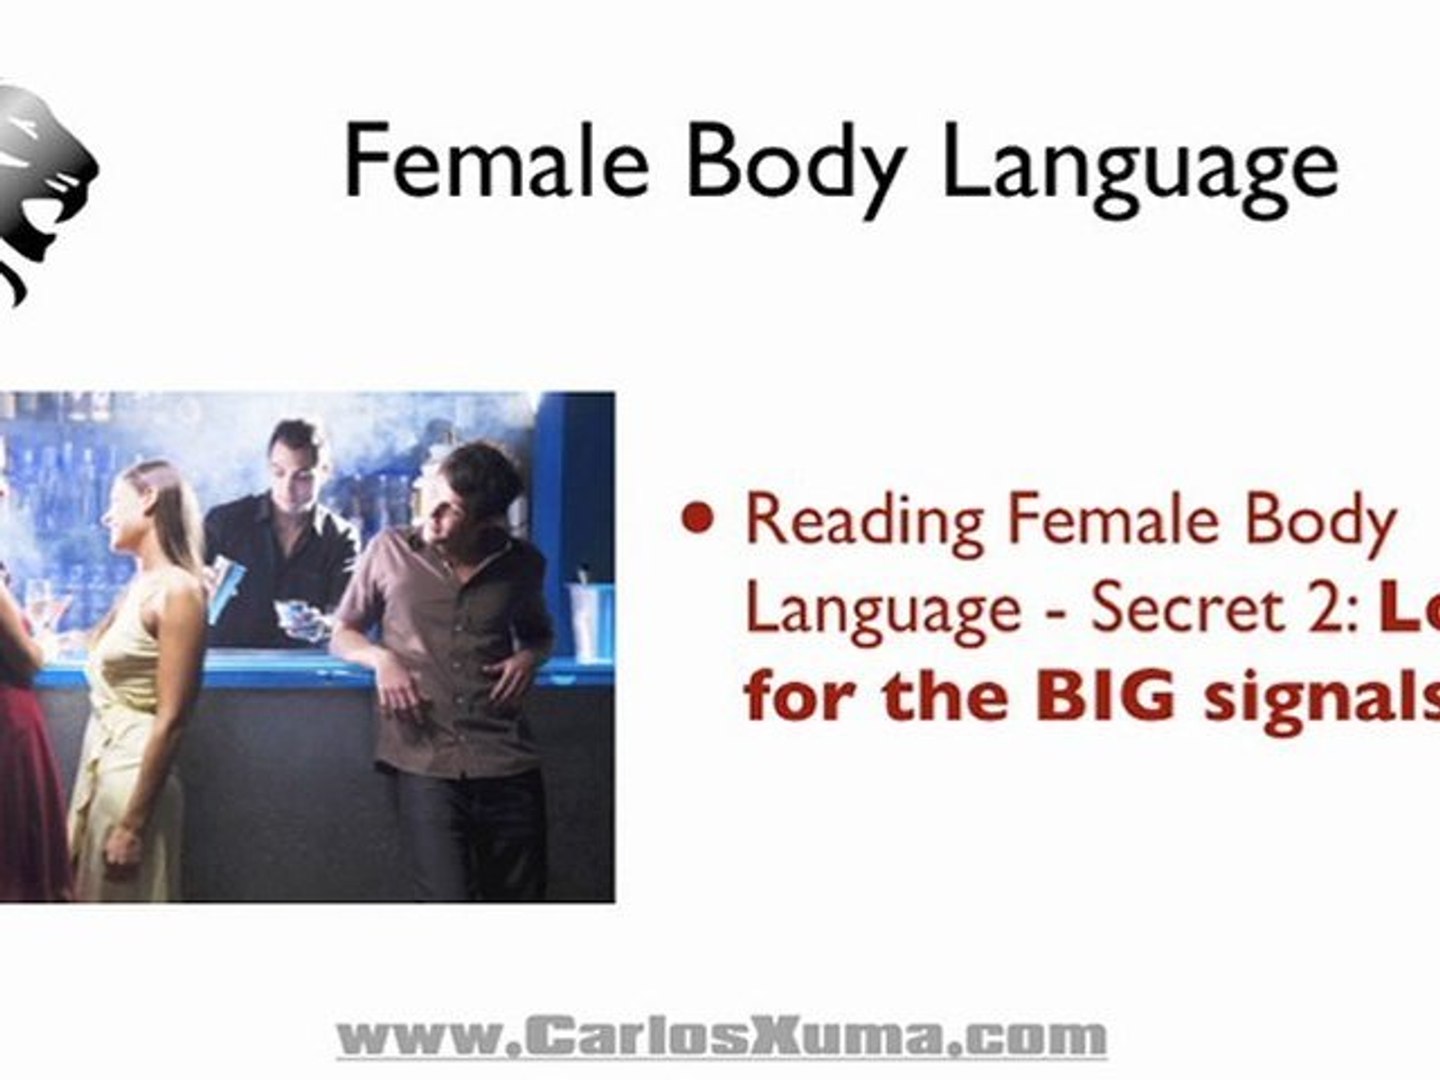 Reading her body language